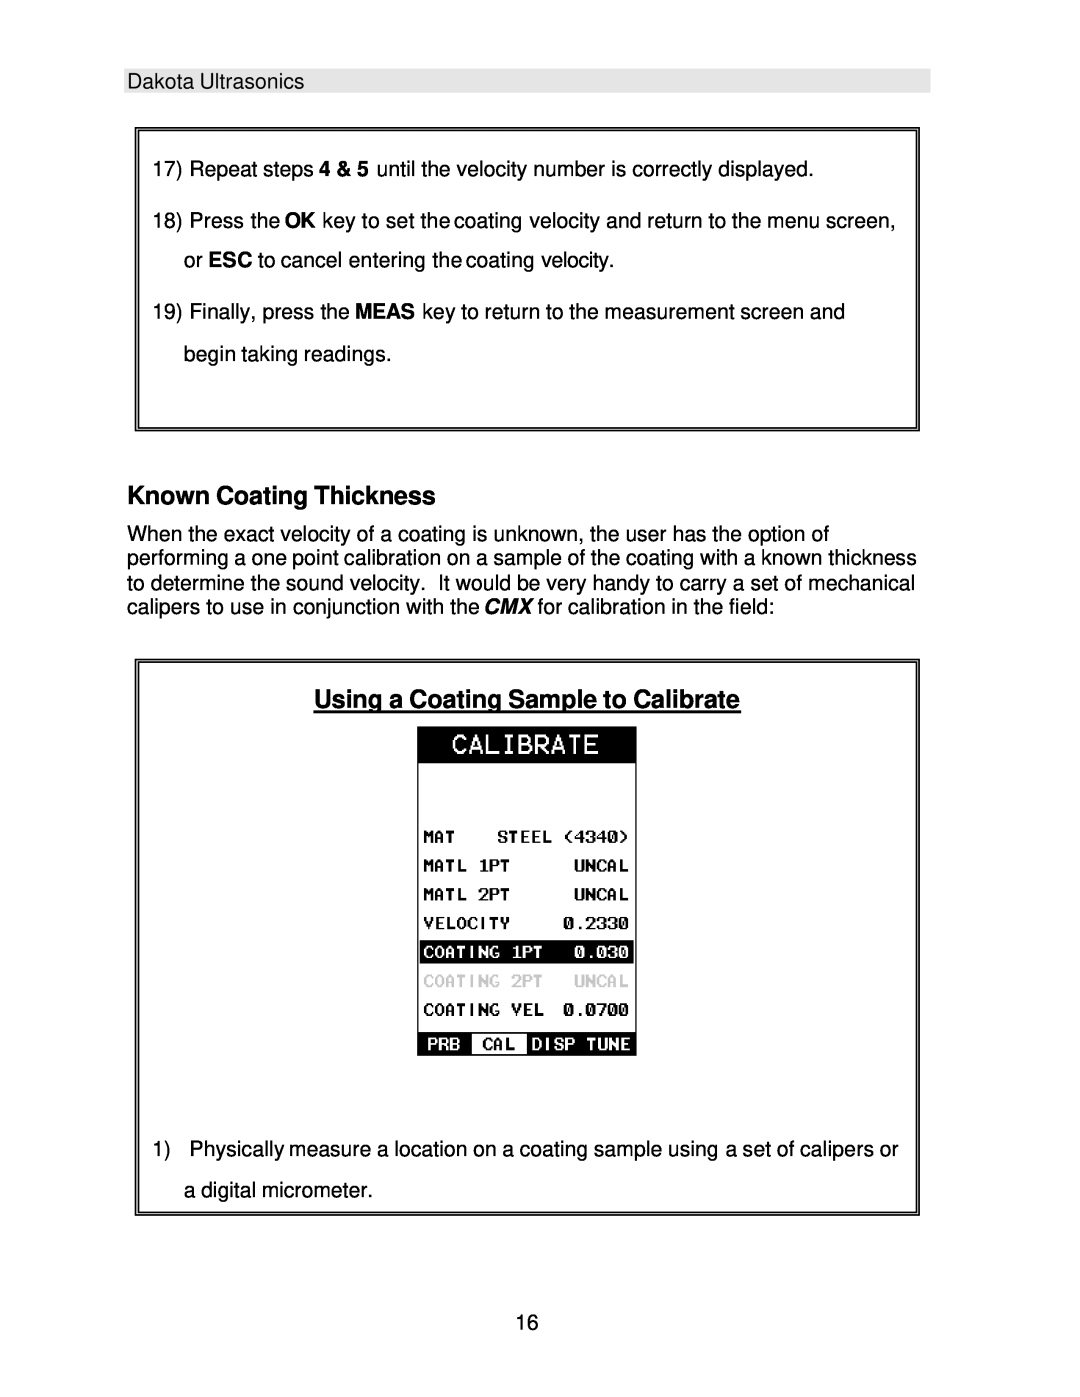 Dakota Digital CMX operation manual Known Coating Thickness, Using a Coating Sample to Calibrate 